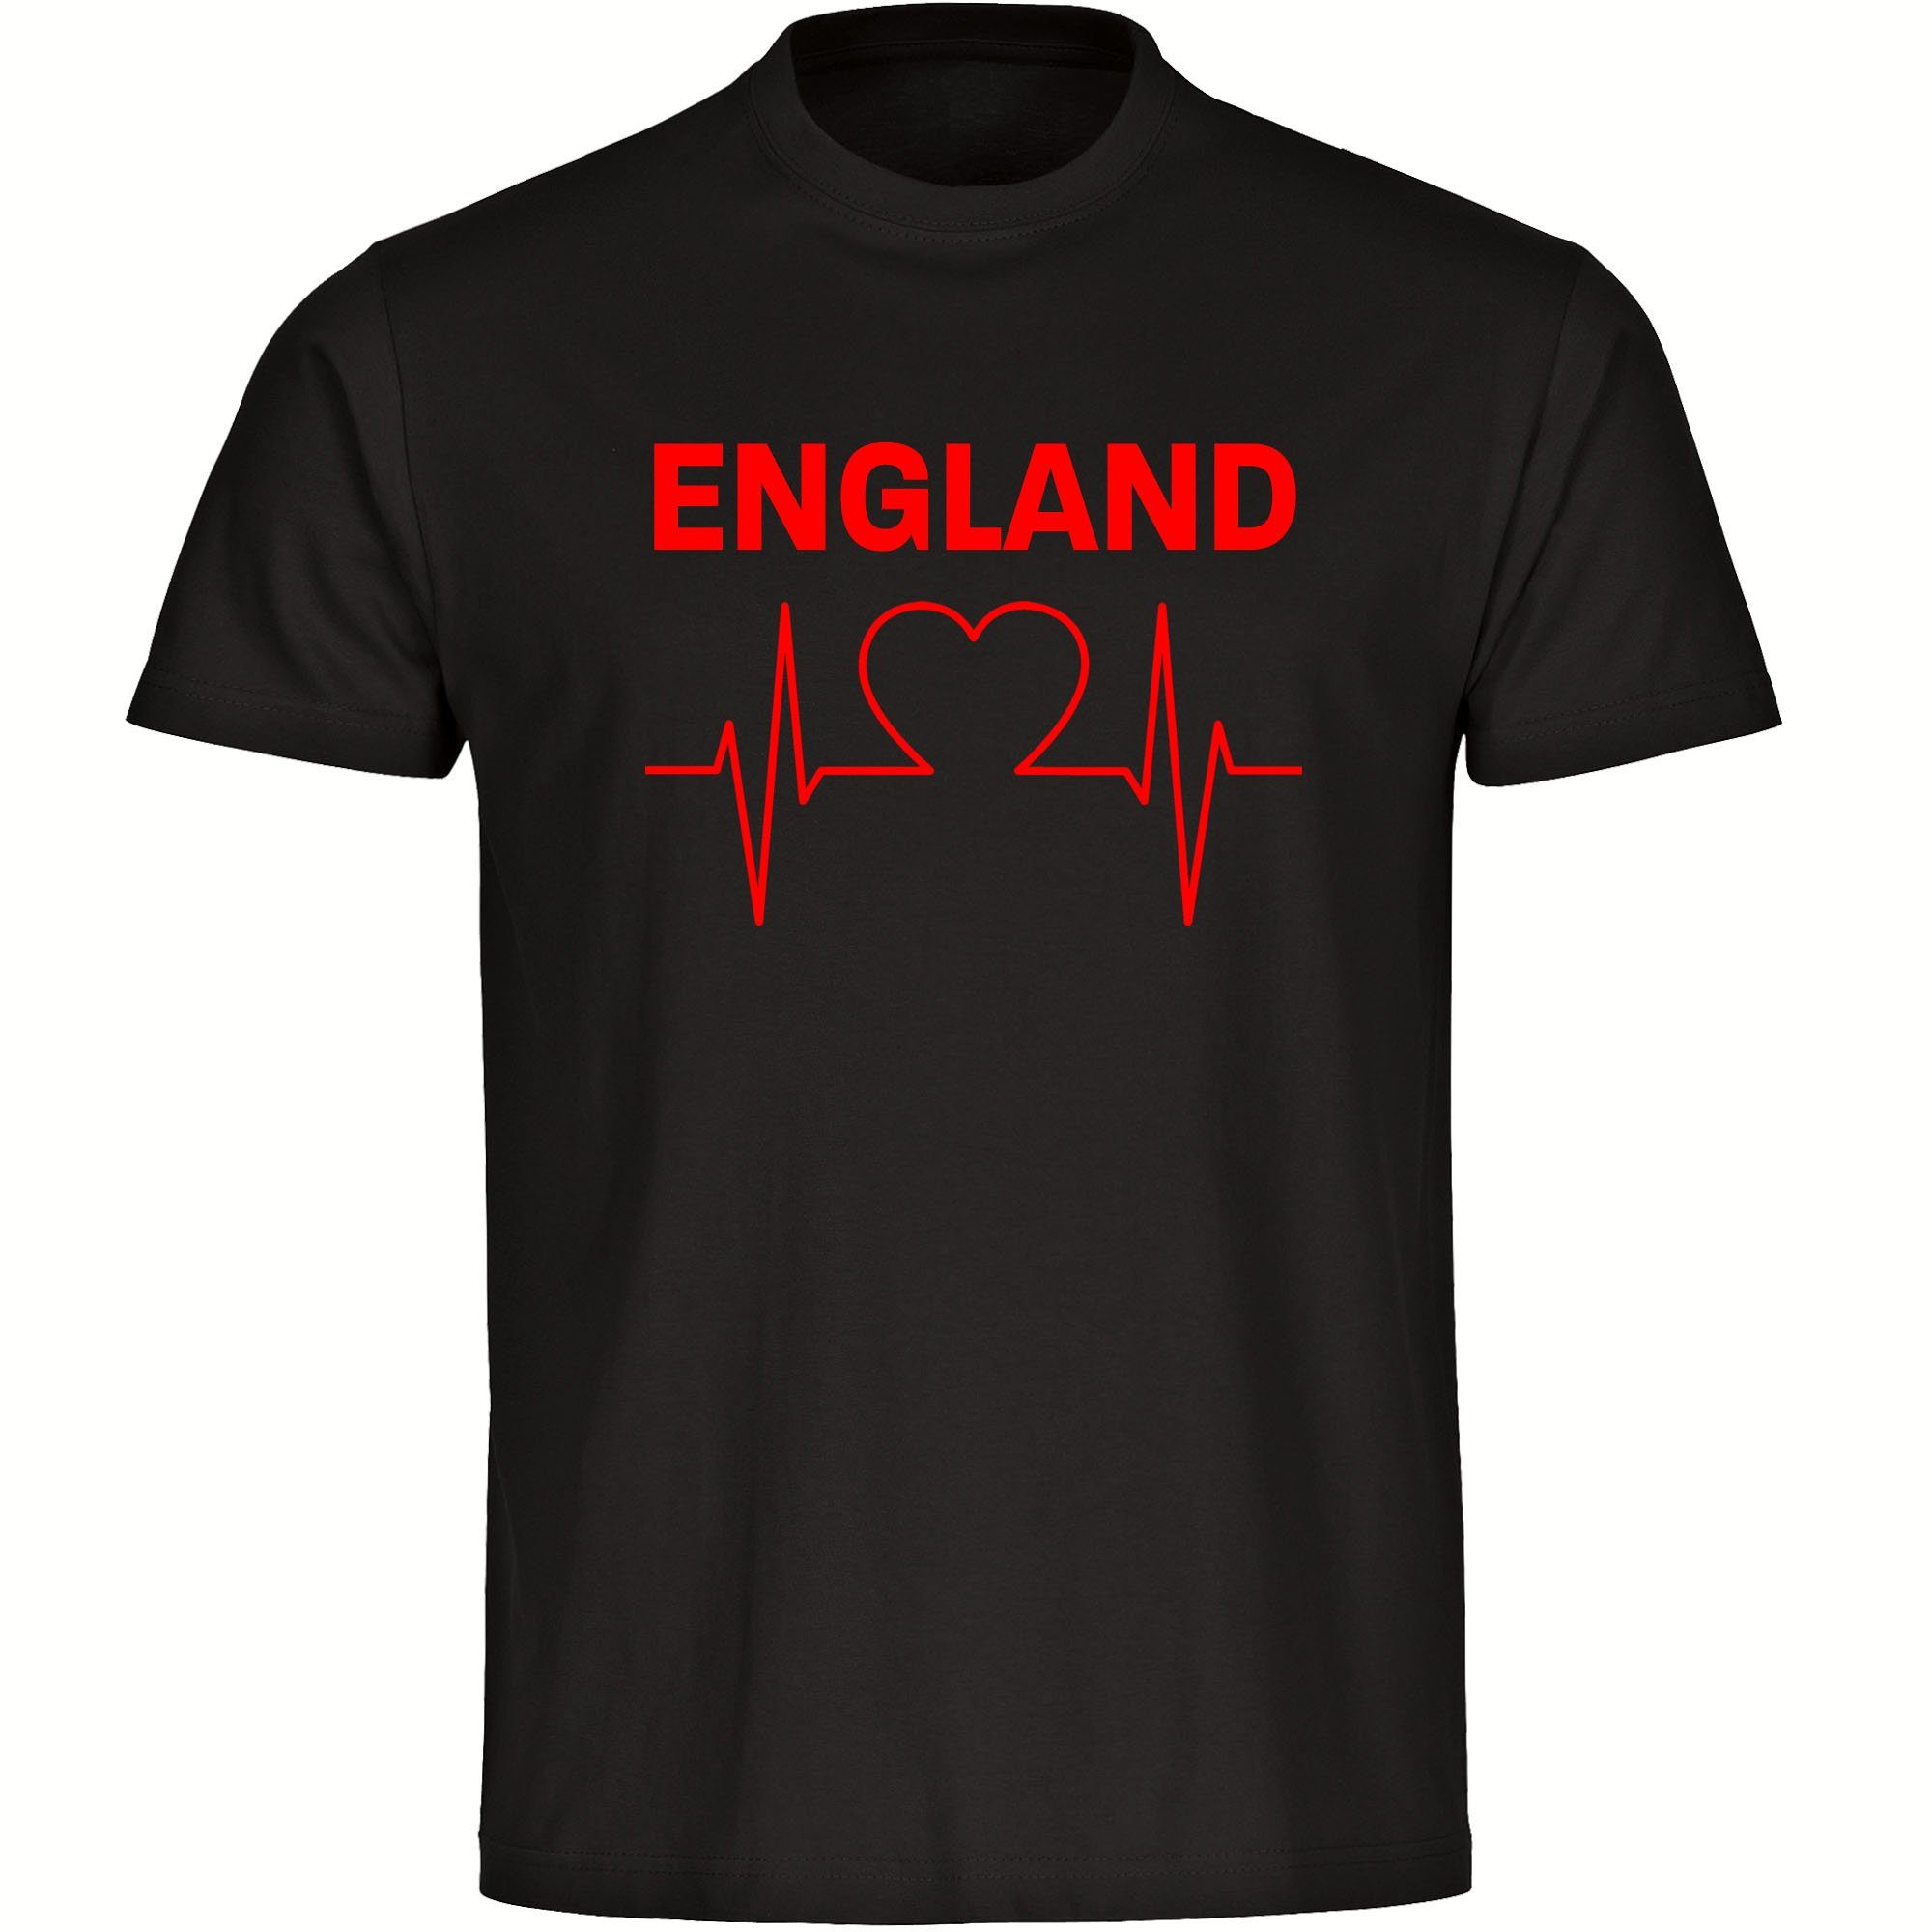 multifanshop T-Shirt Kinder England - Herzschlag - Boy Girl